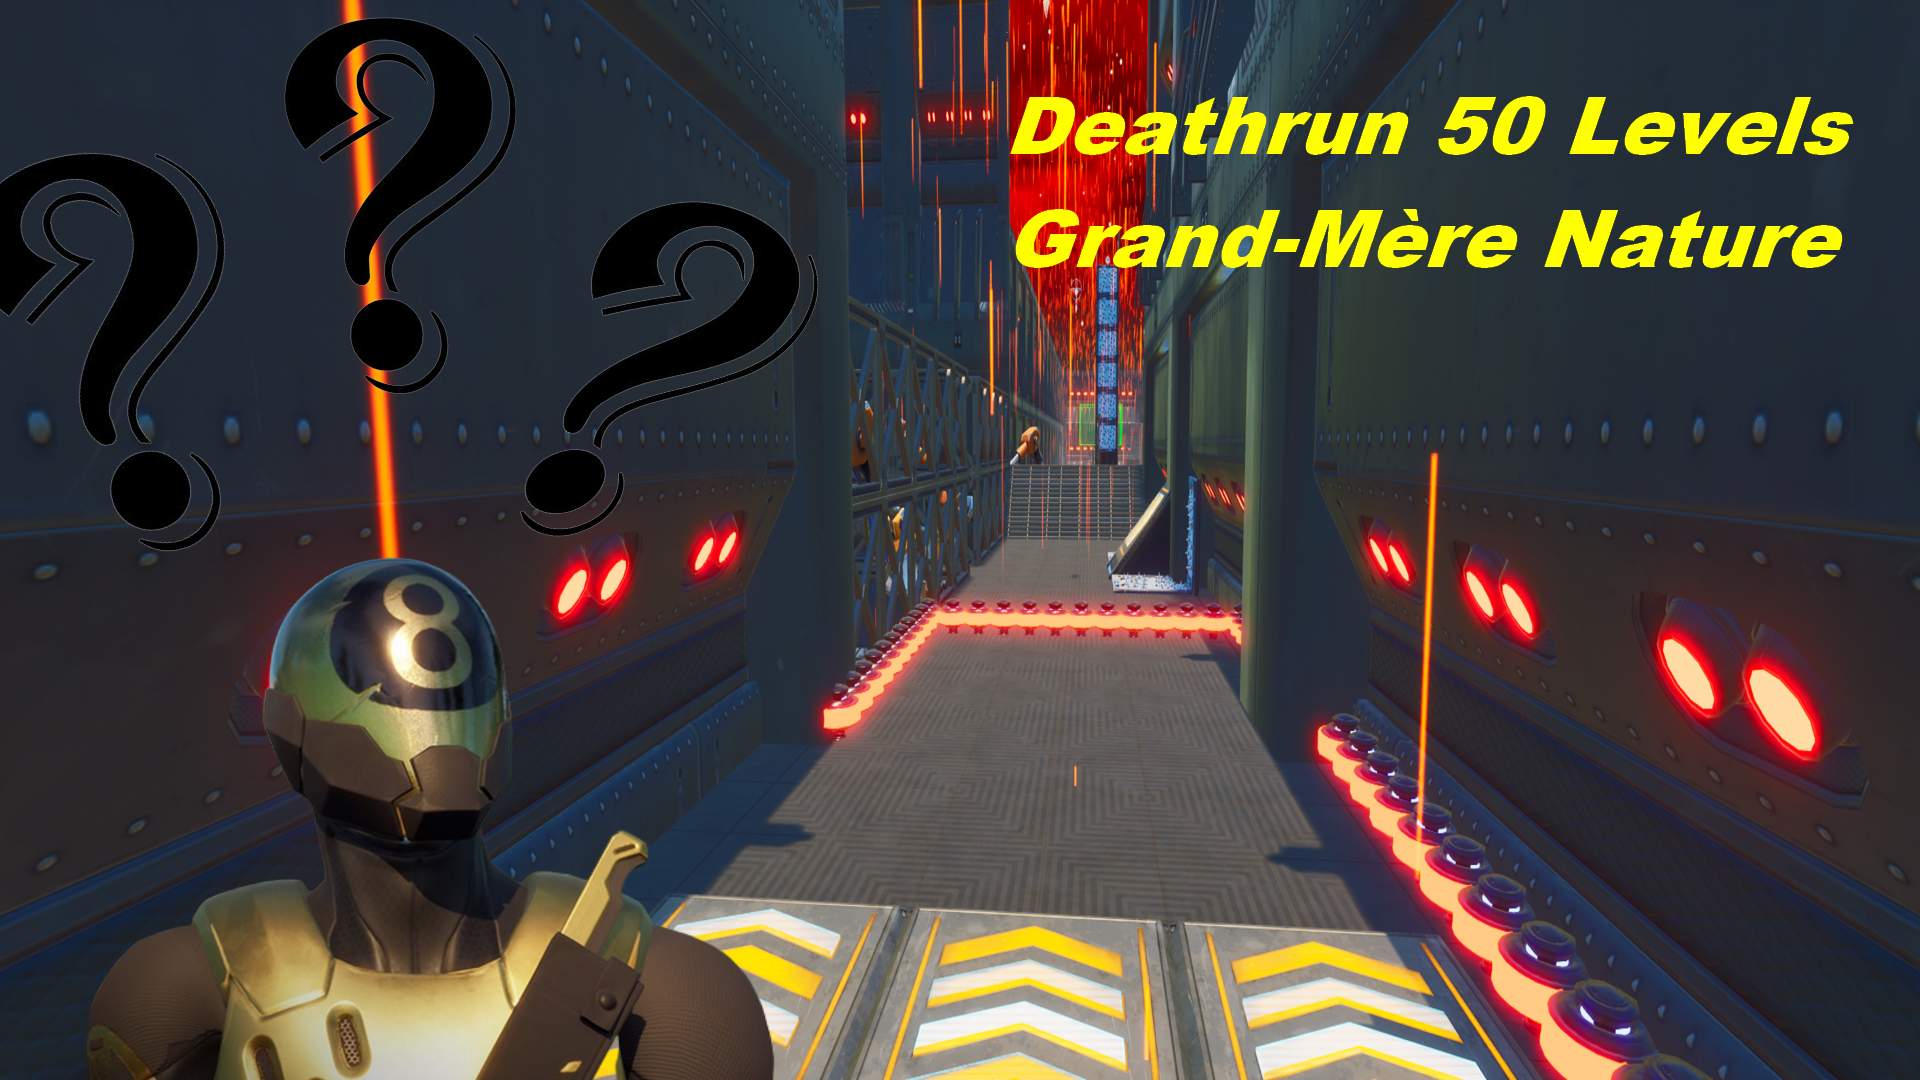 Deathrun 50 Levels Grand-Mère Nature